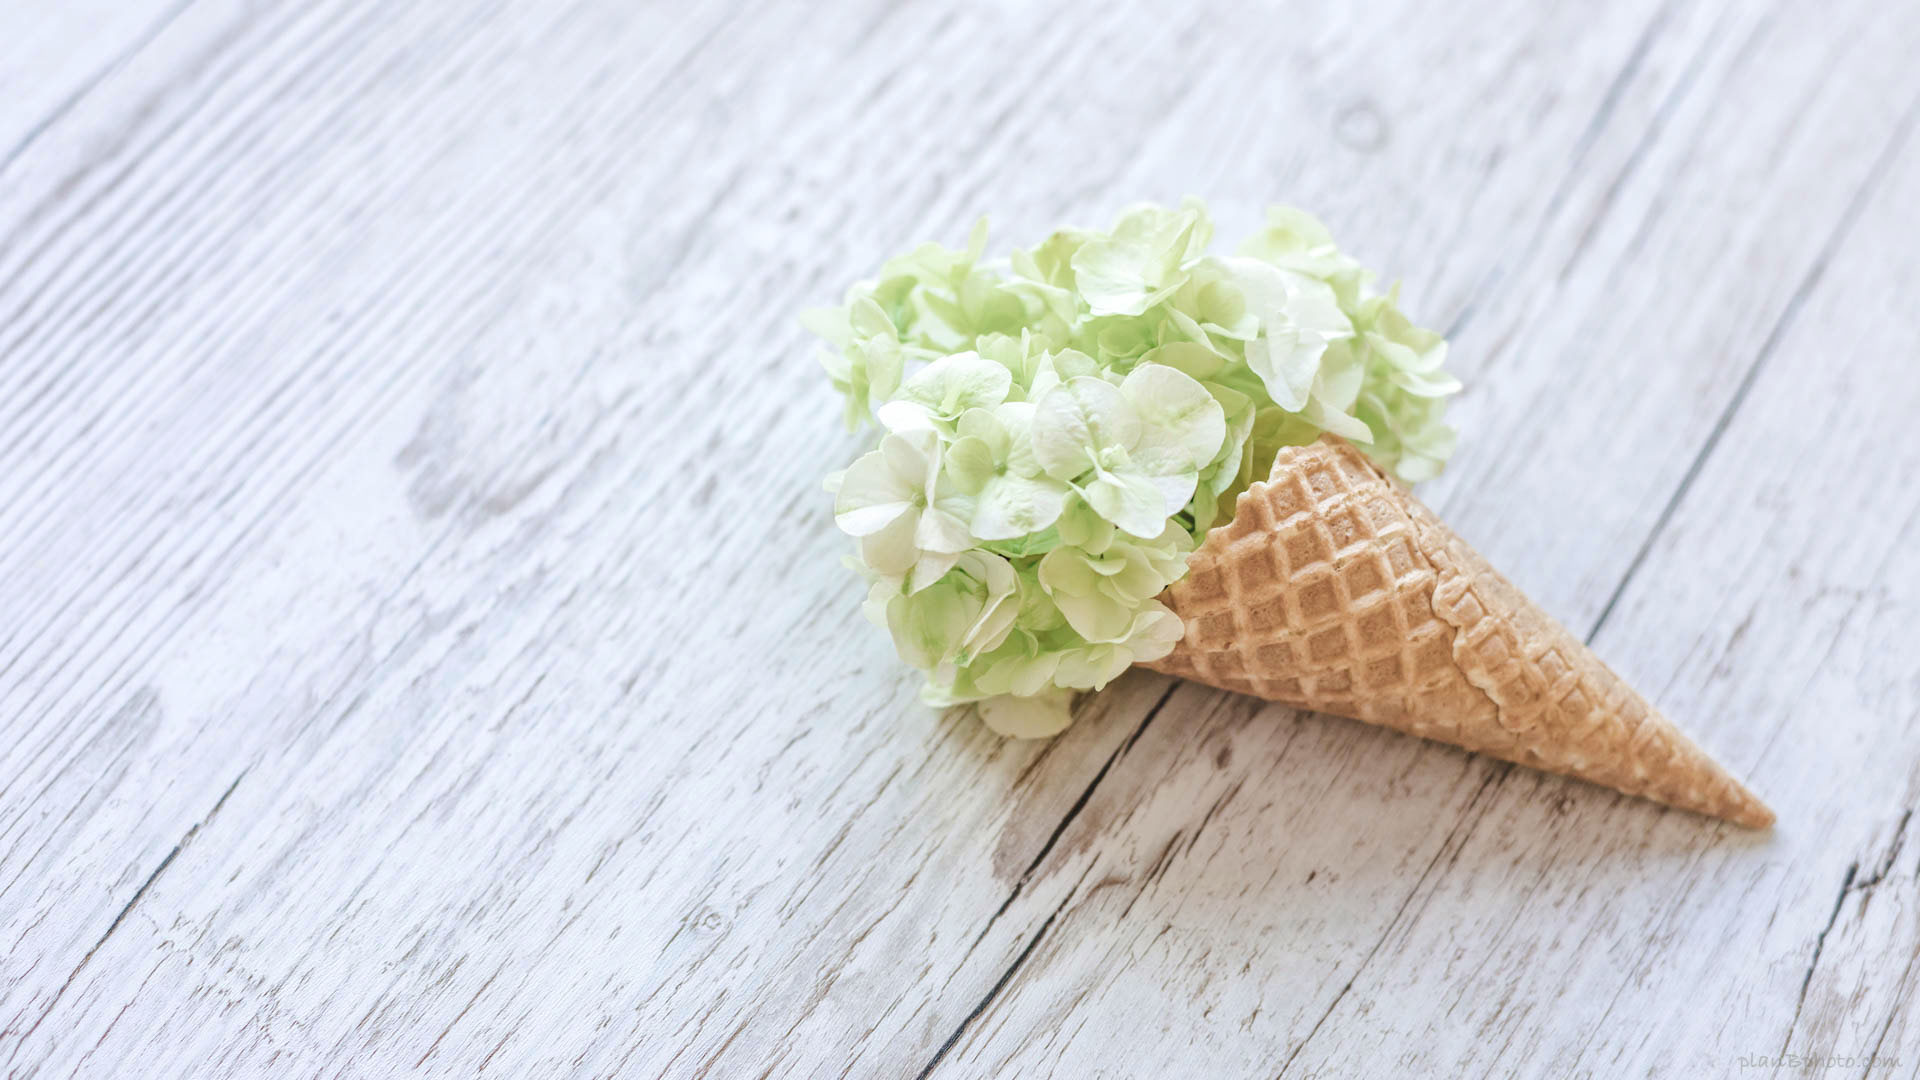 Green hydrangea flowers in an ice-cream cone